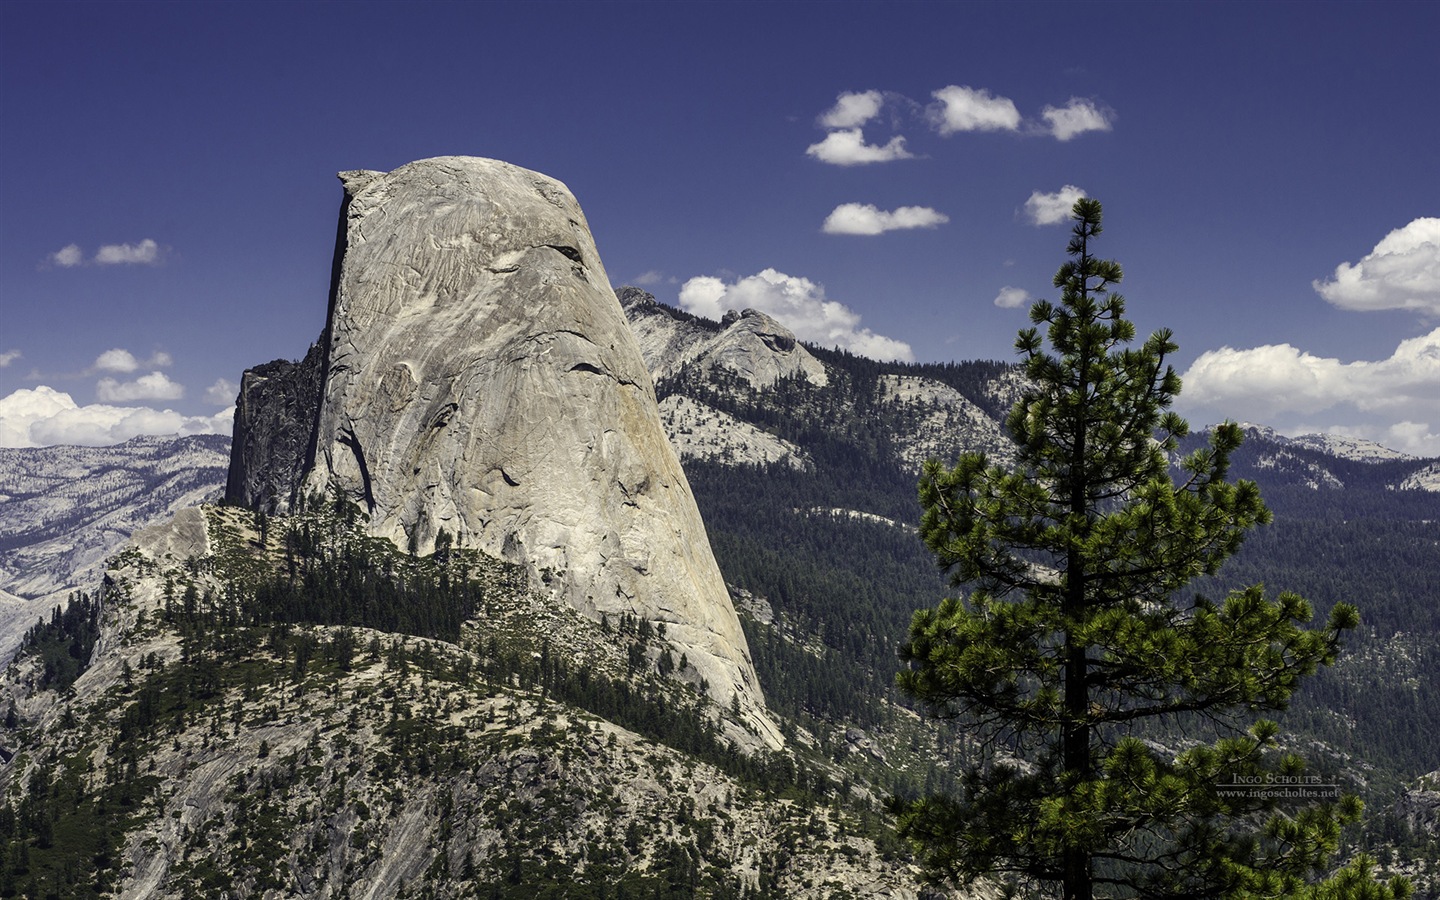 Windows 8 Thema, Yosemite National Park HD Wallpaper #13 - 1440x900